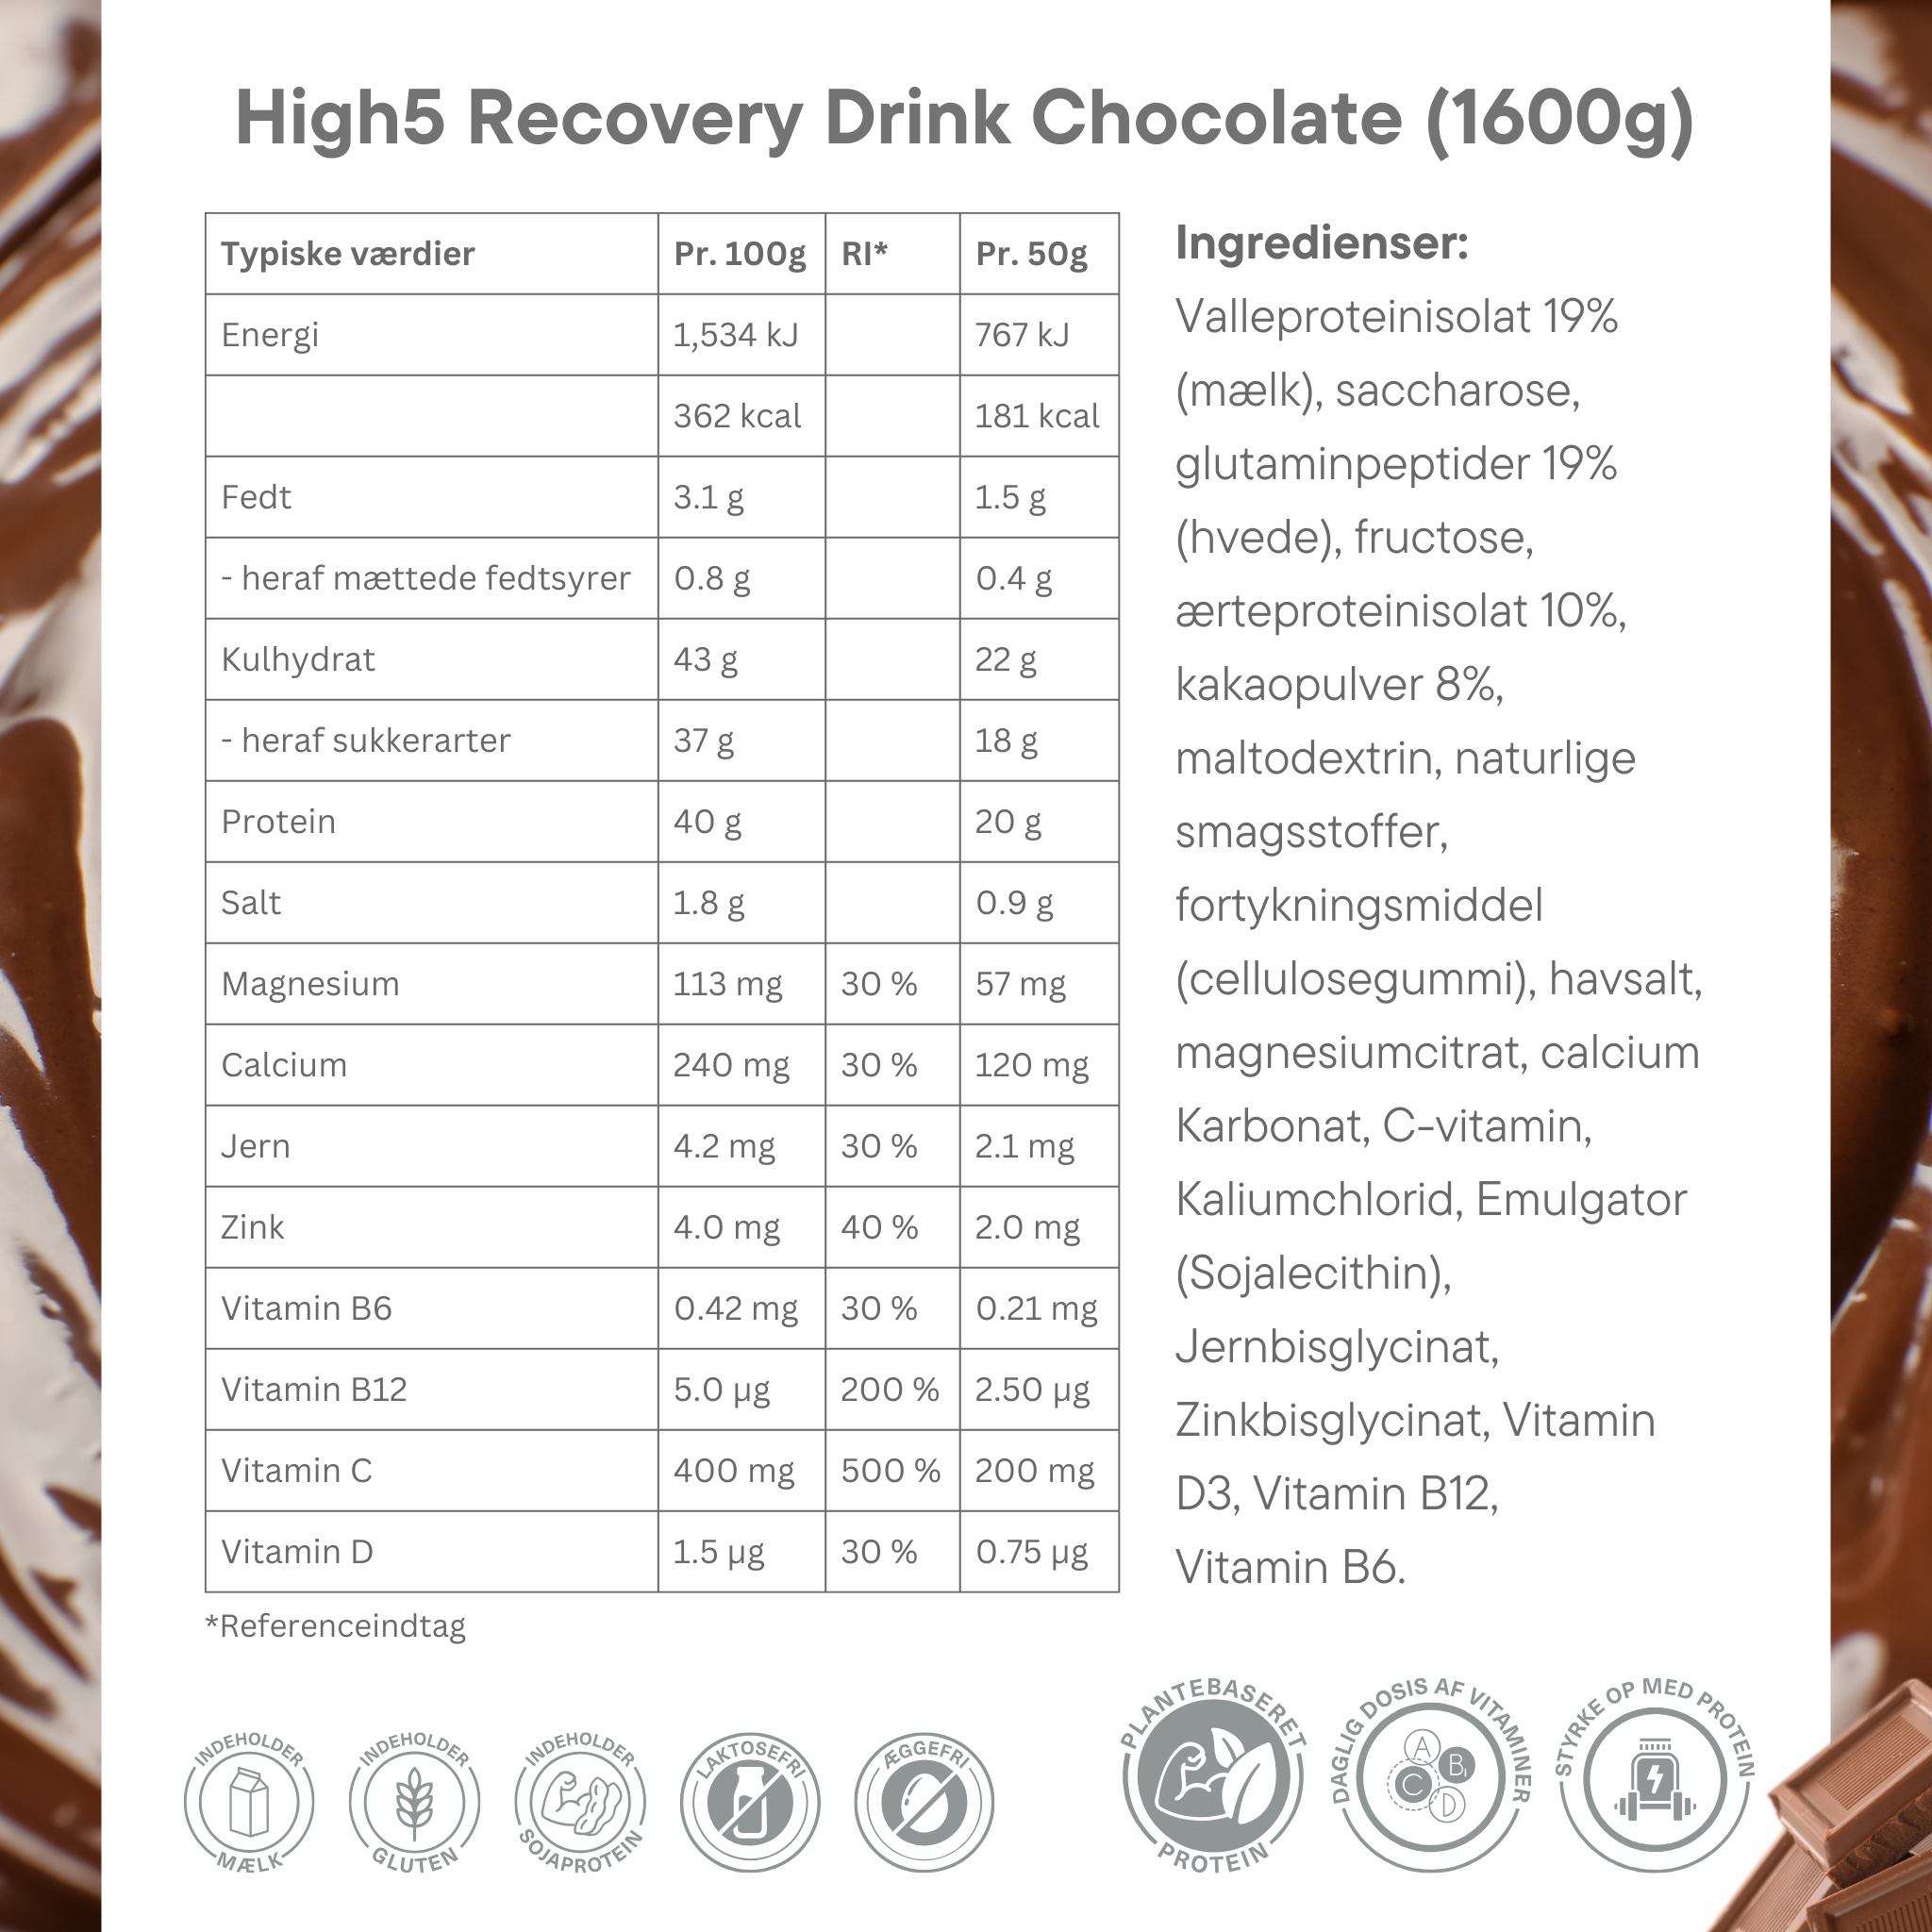 High5 Proteindrik Recovery Drink Powder Chokolade - 1600 g